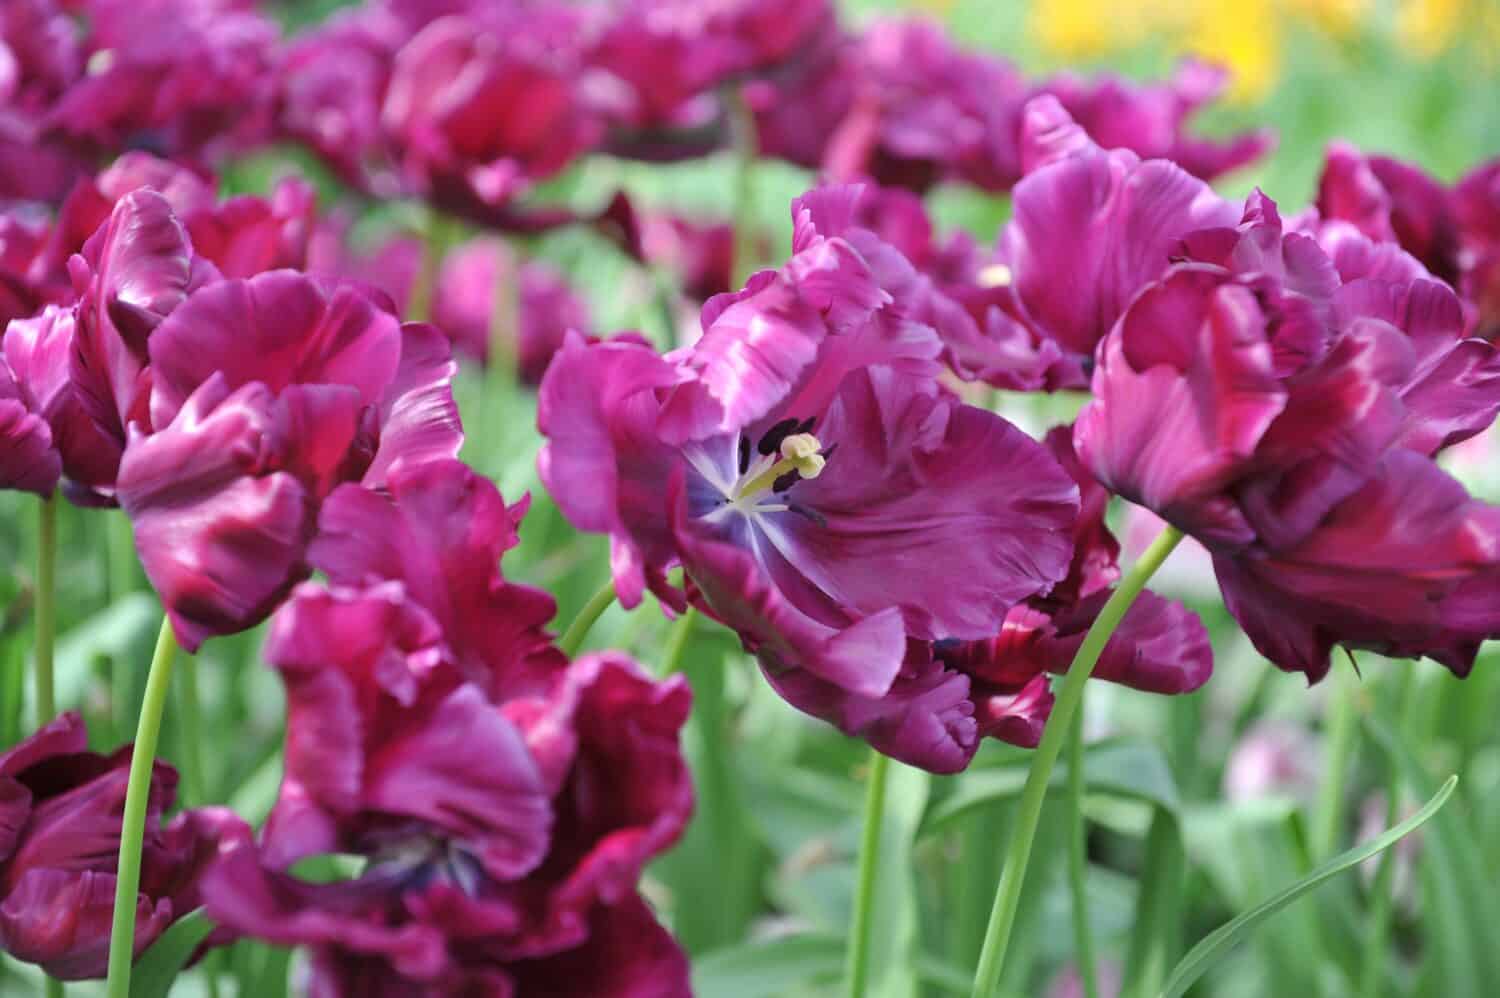 Purple parrot tulips (Tulipa) Victoria's Secret bloom in a garden in April